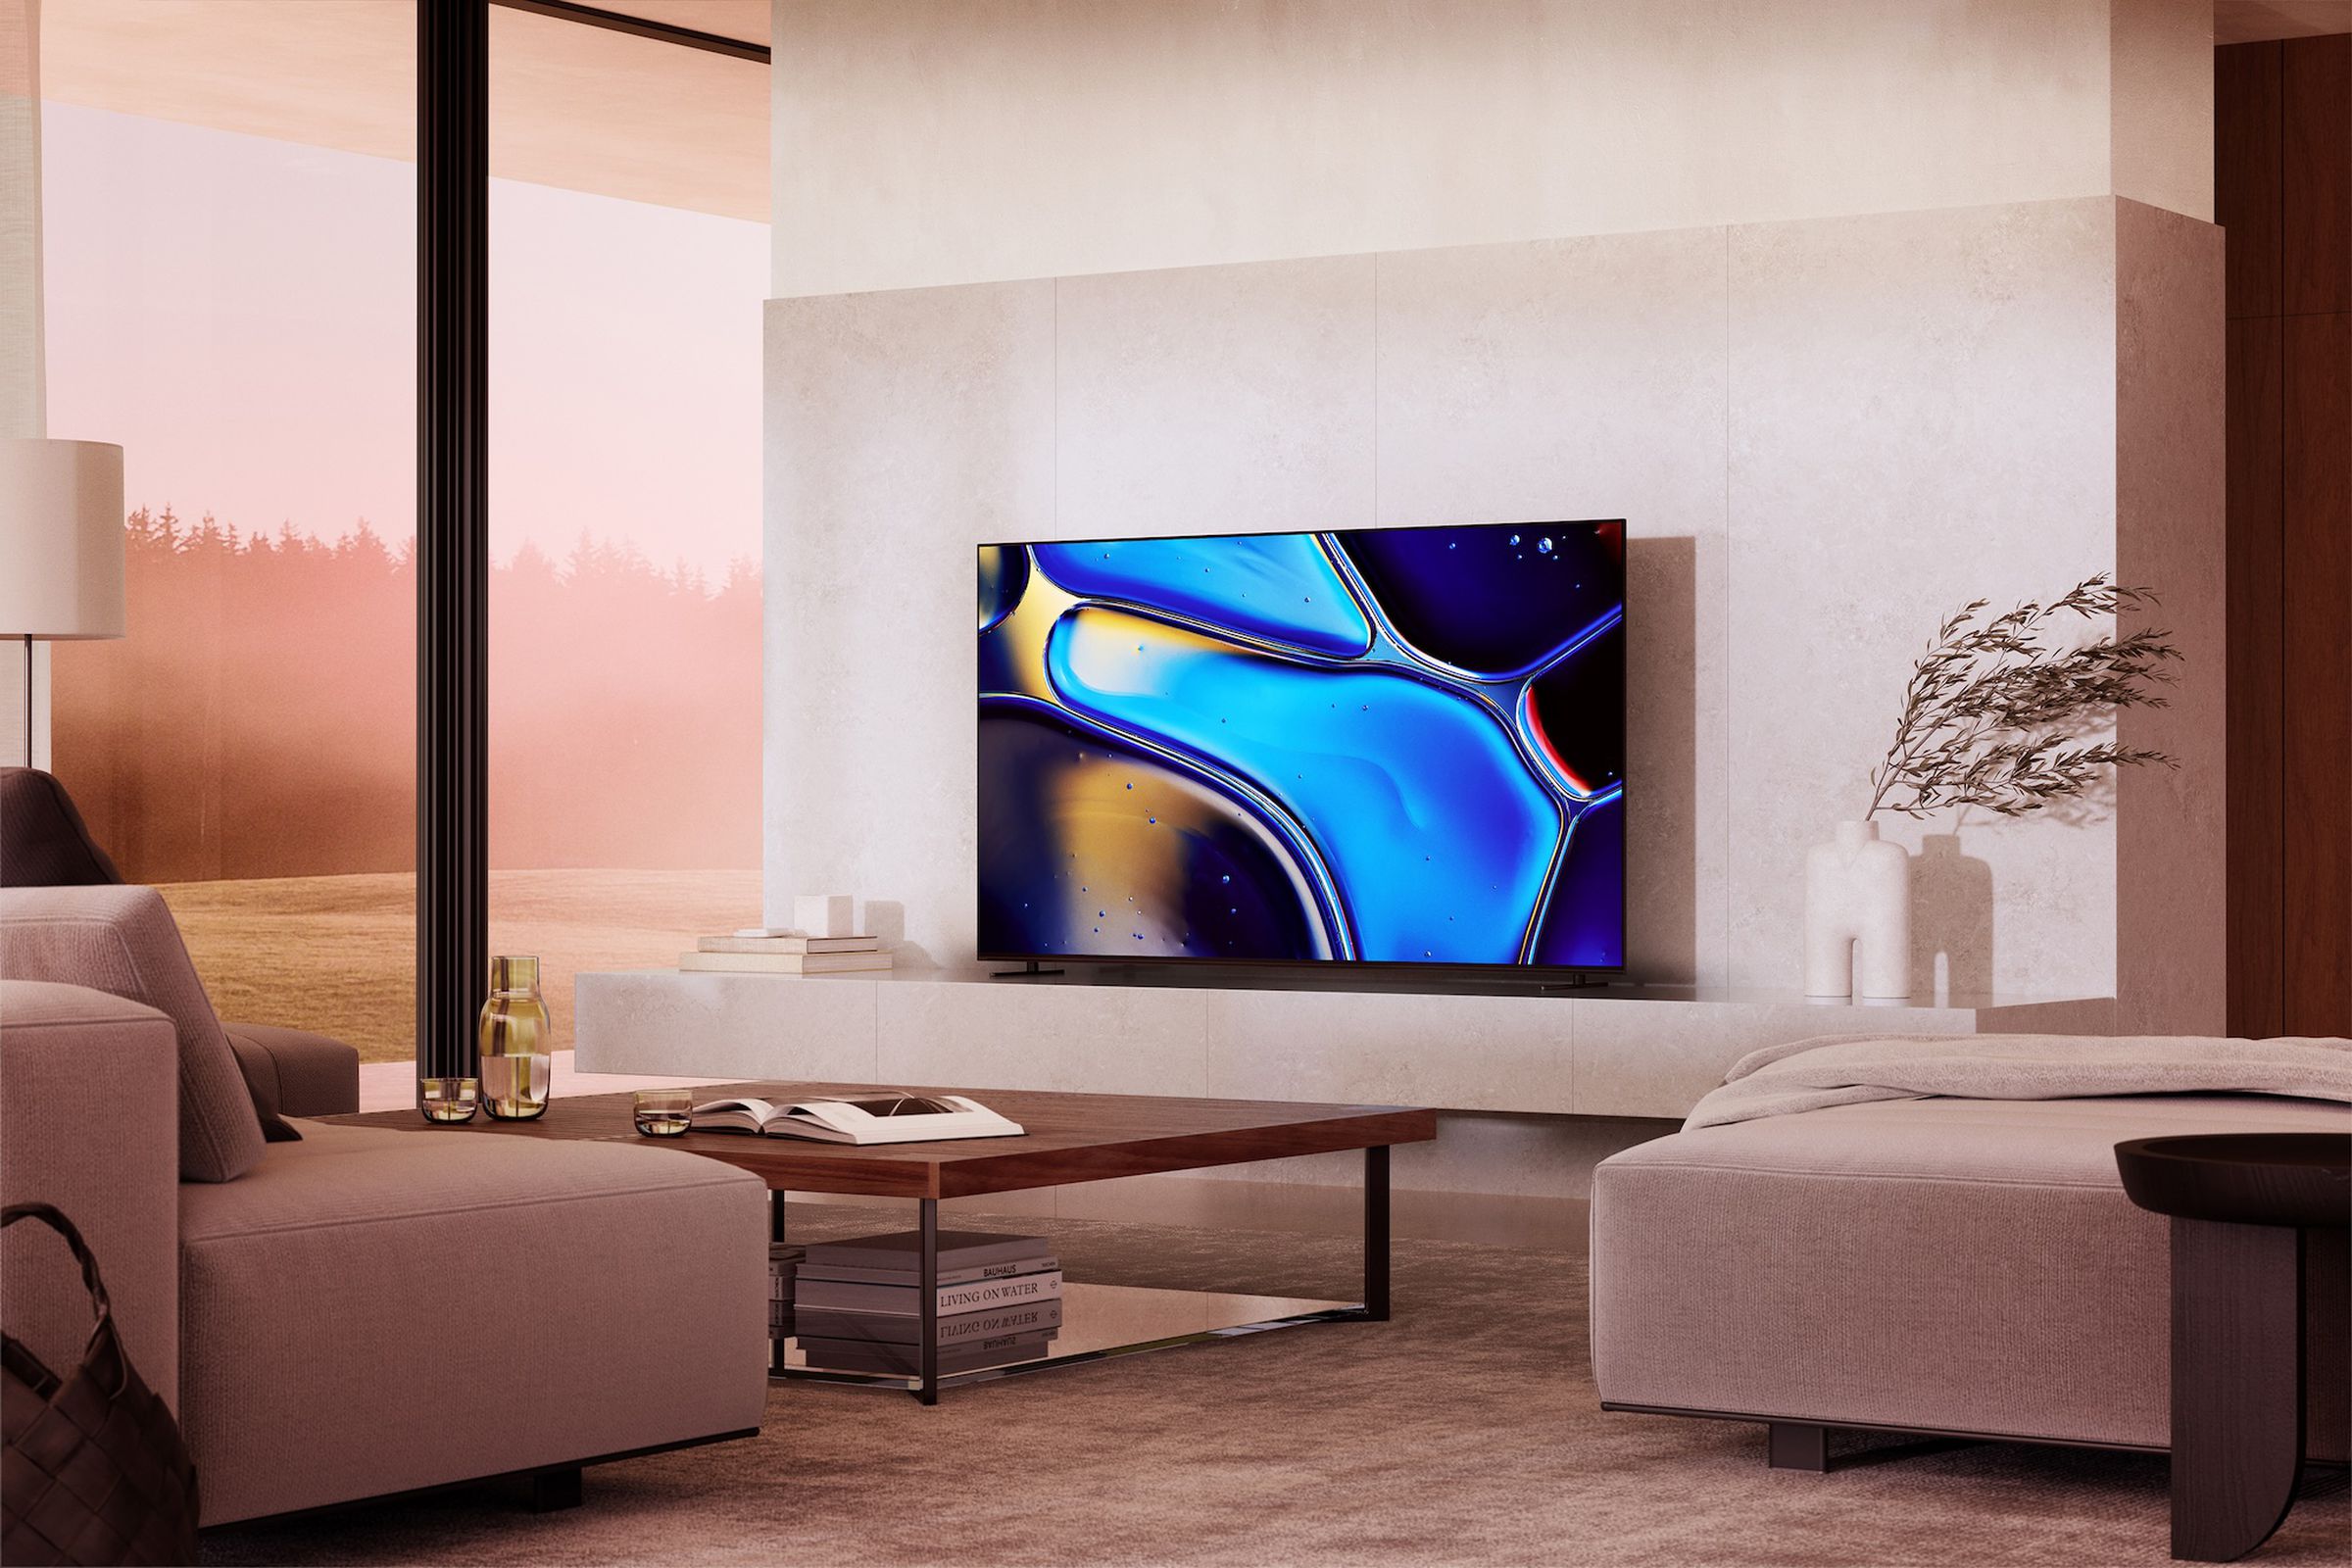 A marketing image of Sony’s Bravia 8 OLED TV.